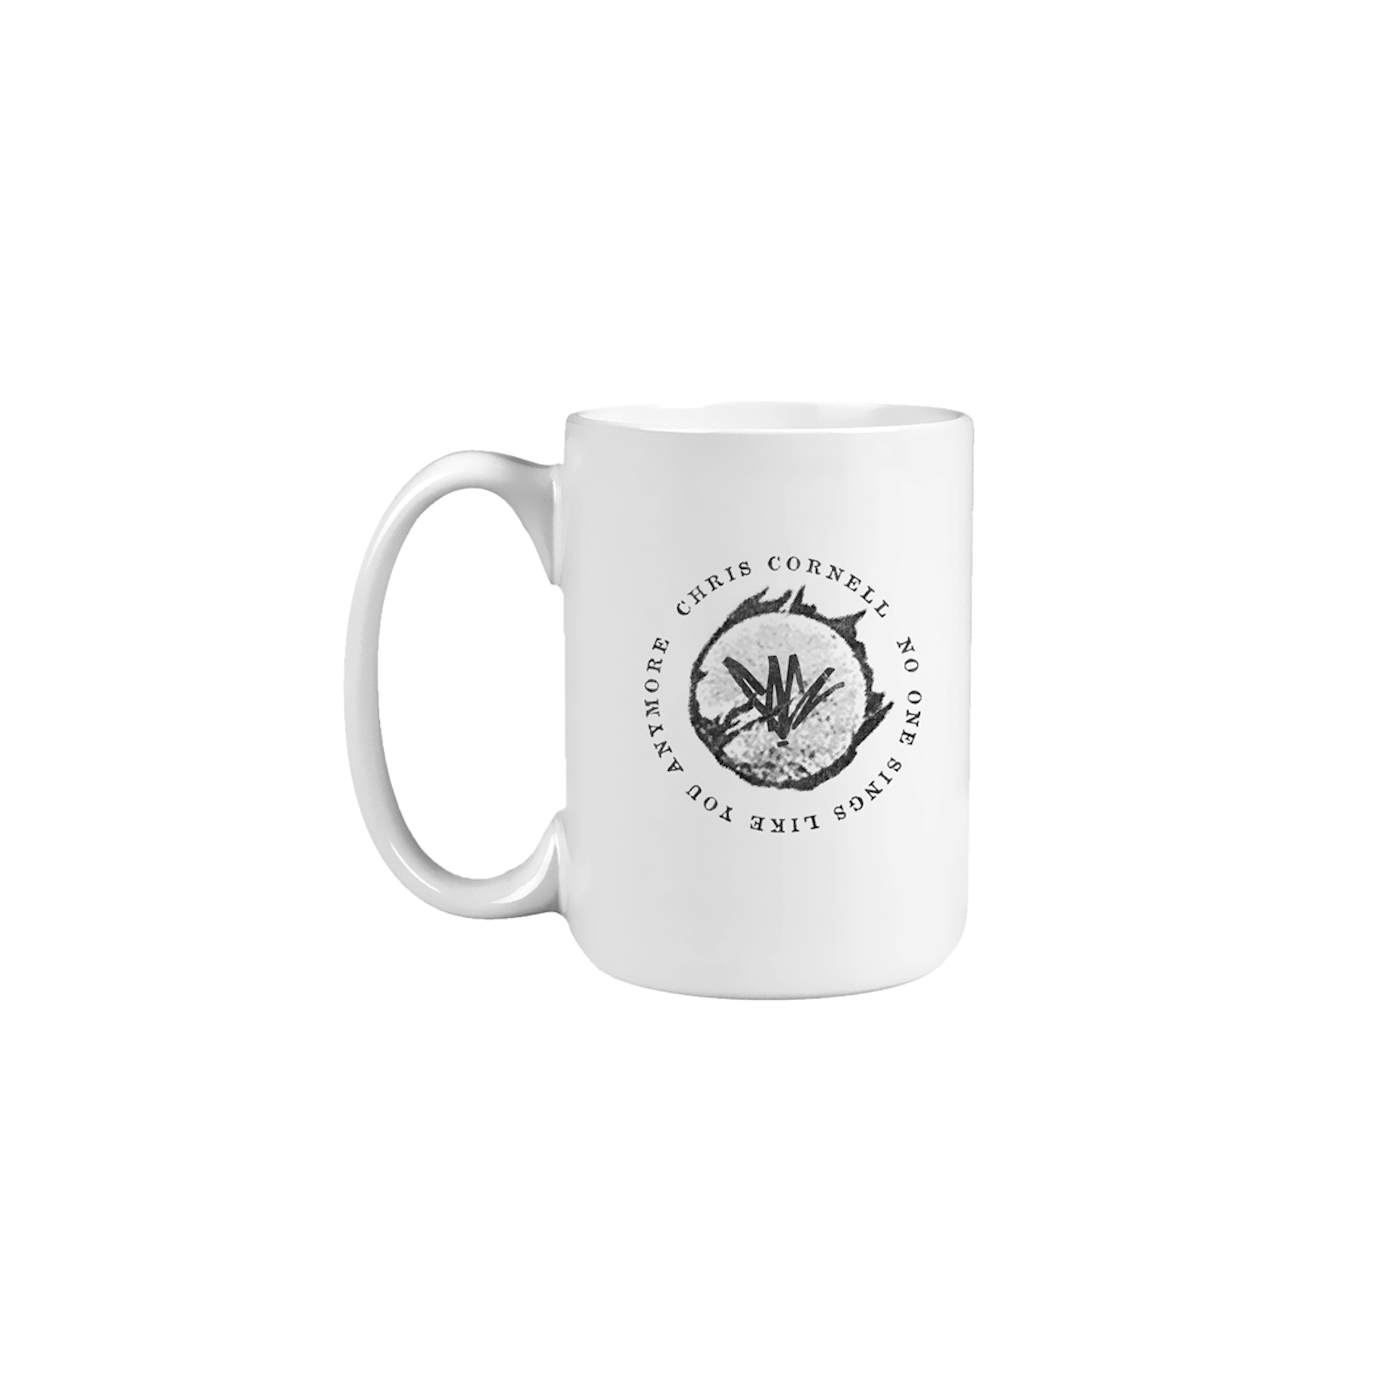 Chris Cornell Coffee Mug